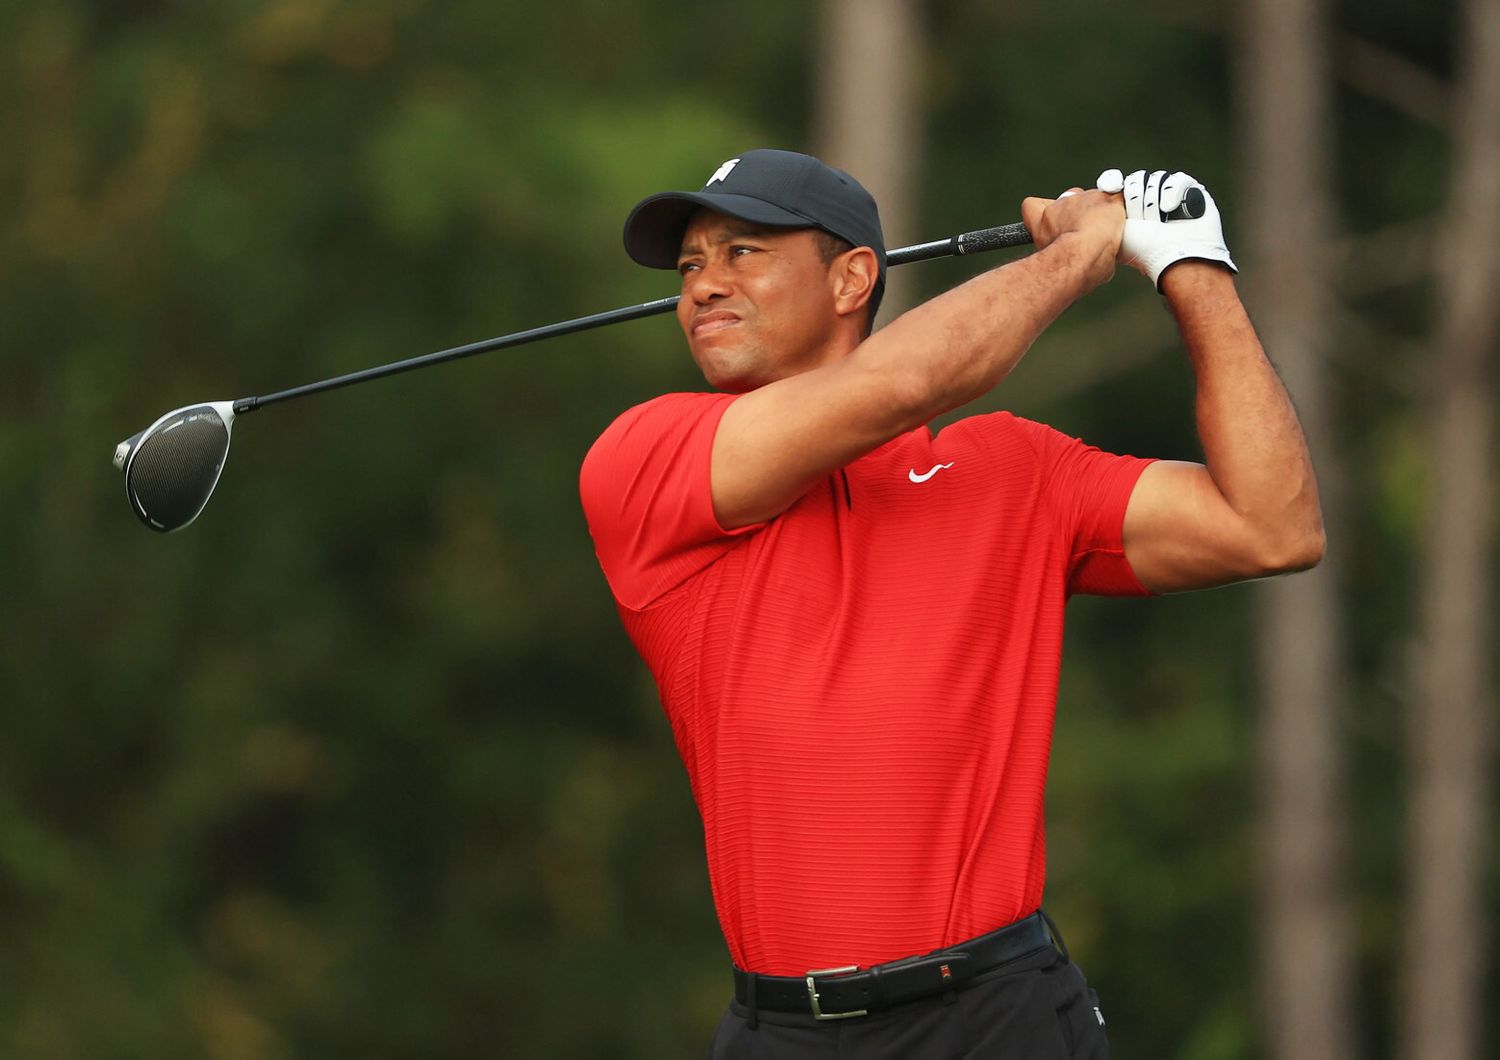 Il campione di golf, Tiger Woods&nbsp;